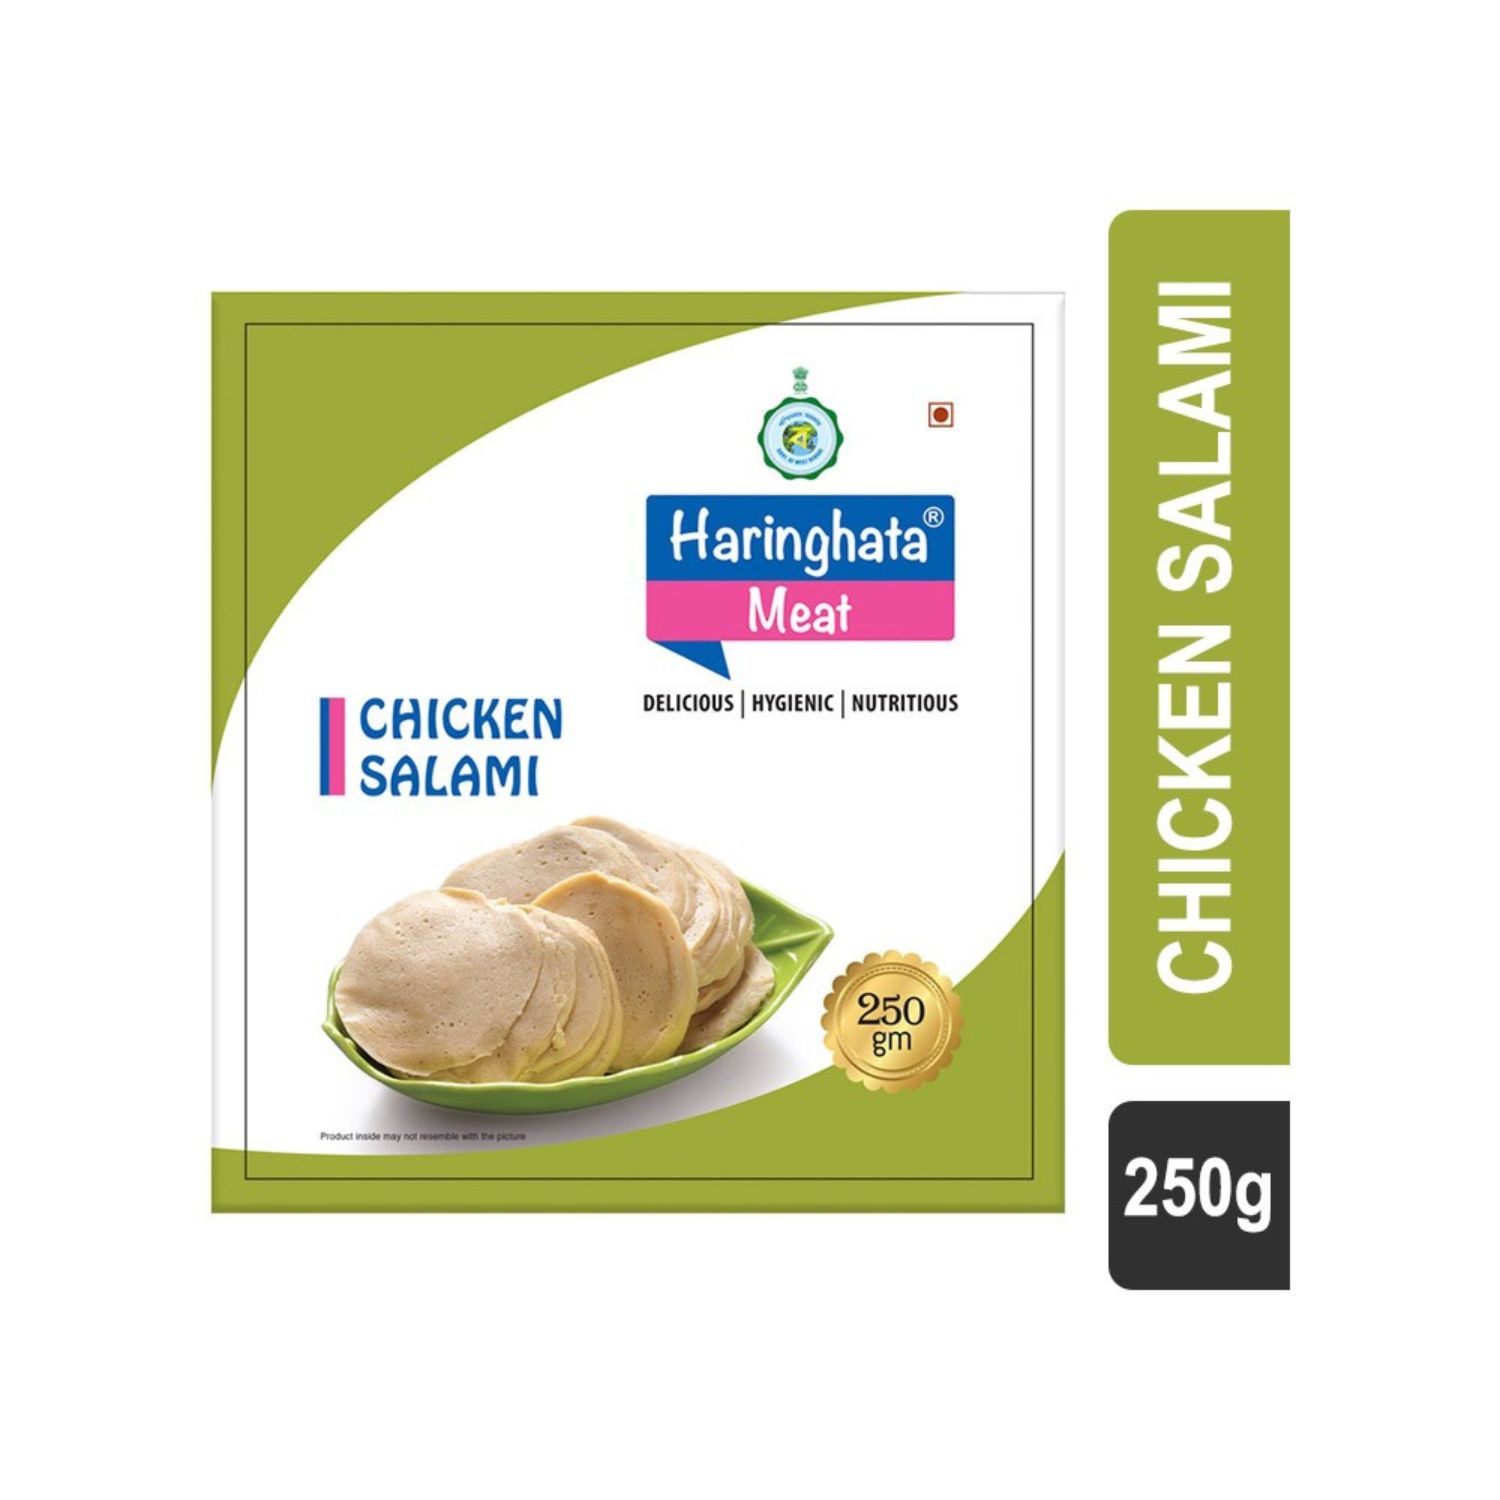 Haringhata Chicken Salami